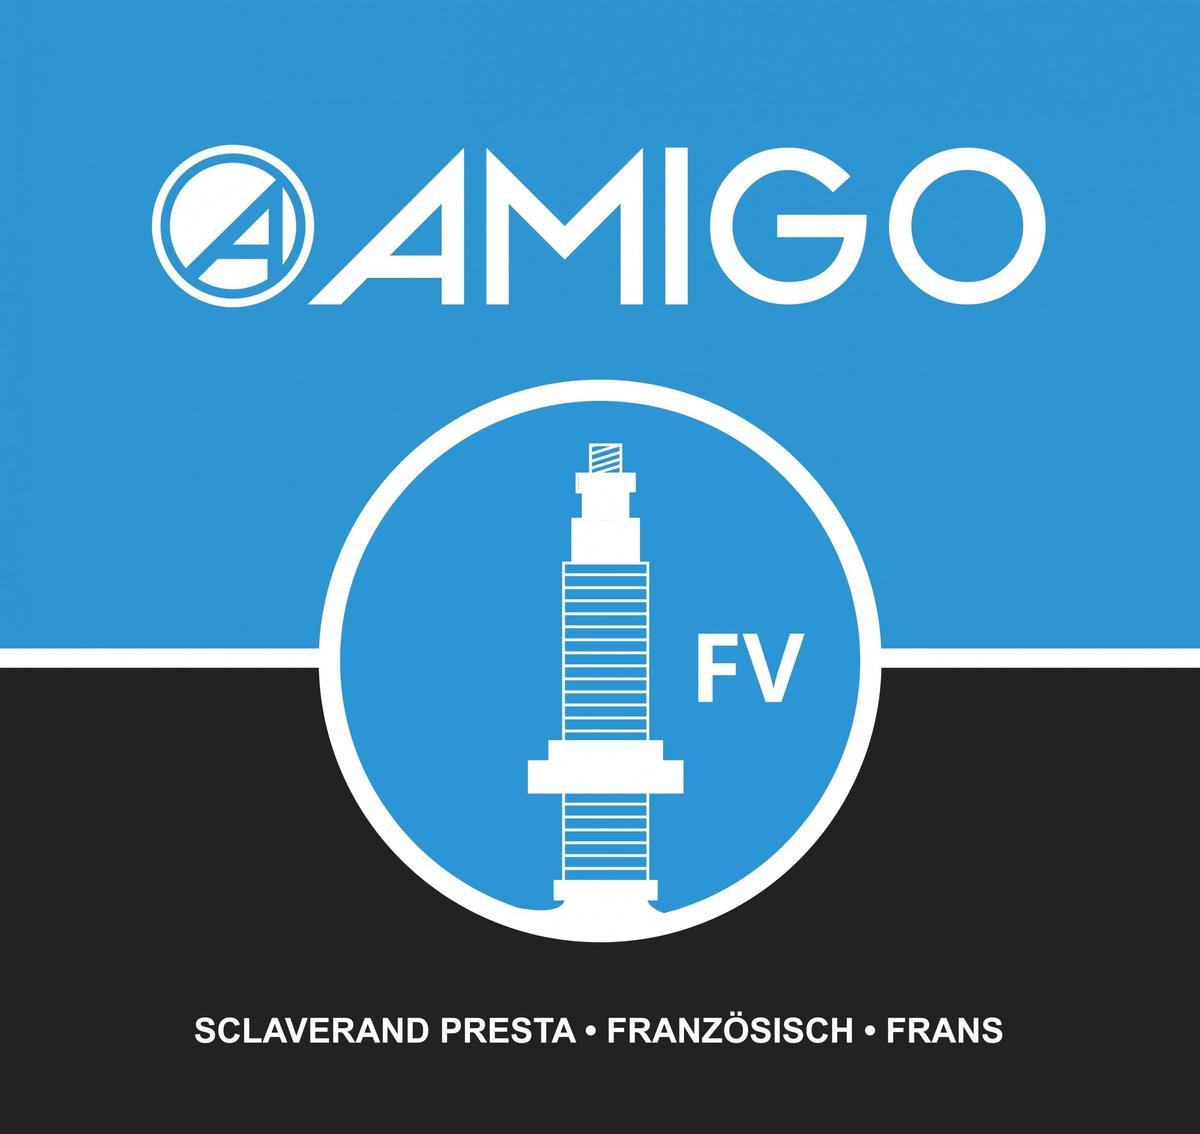 Amigo Binnenband 20 X 2 X 1 3/4 (54-400) Fv 48 Mm - Zwart